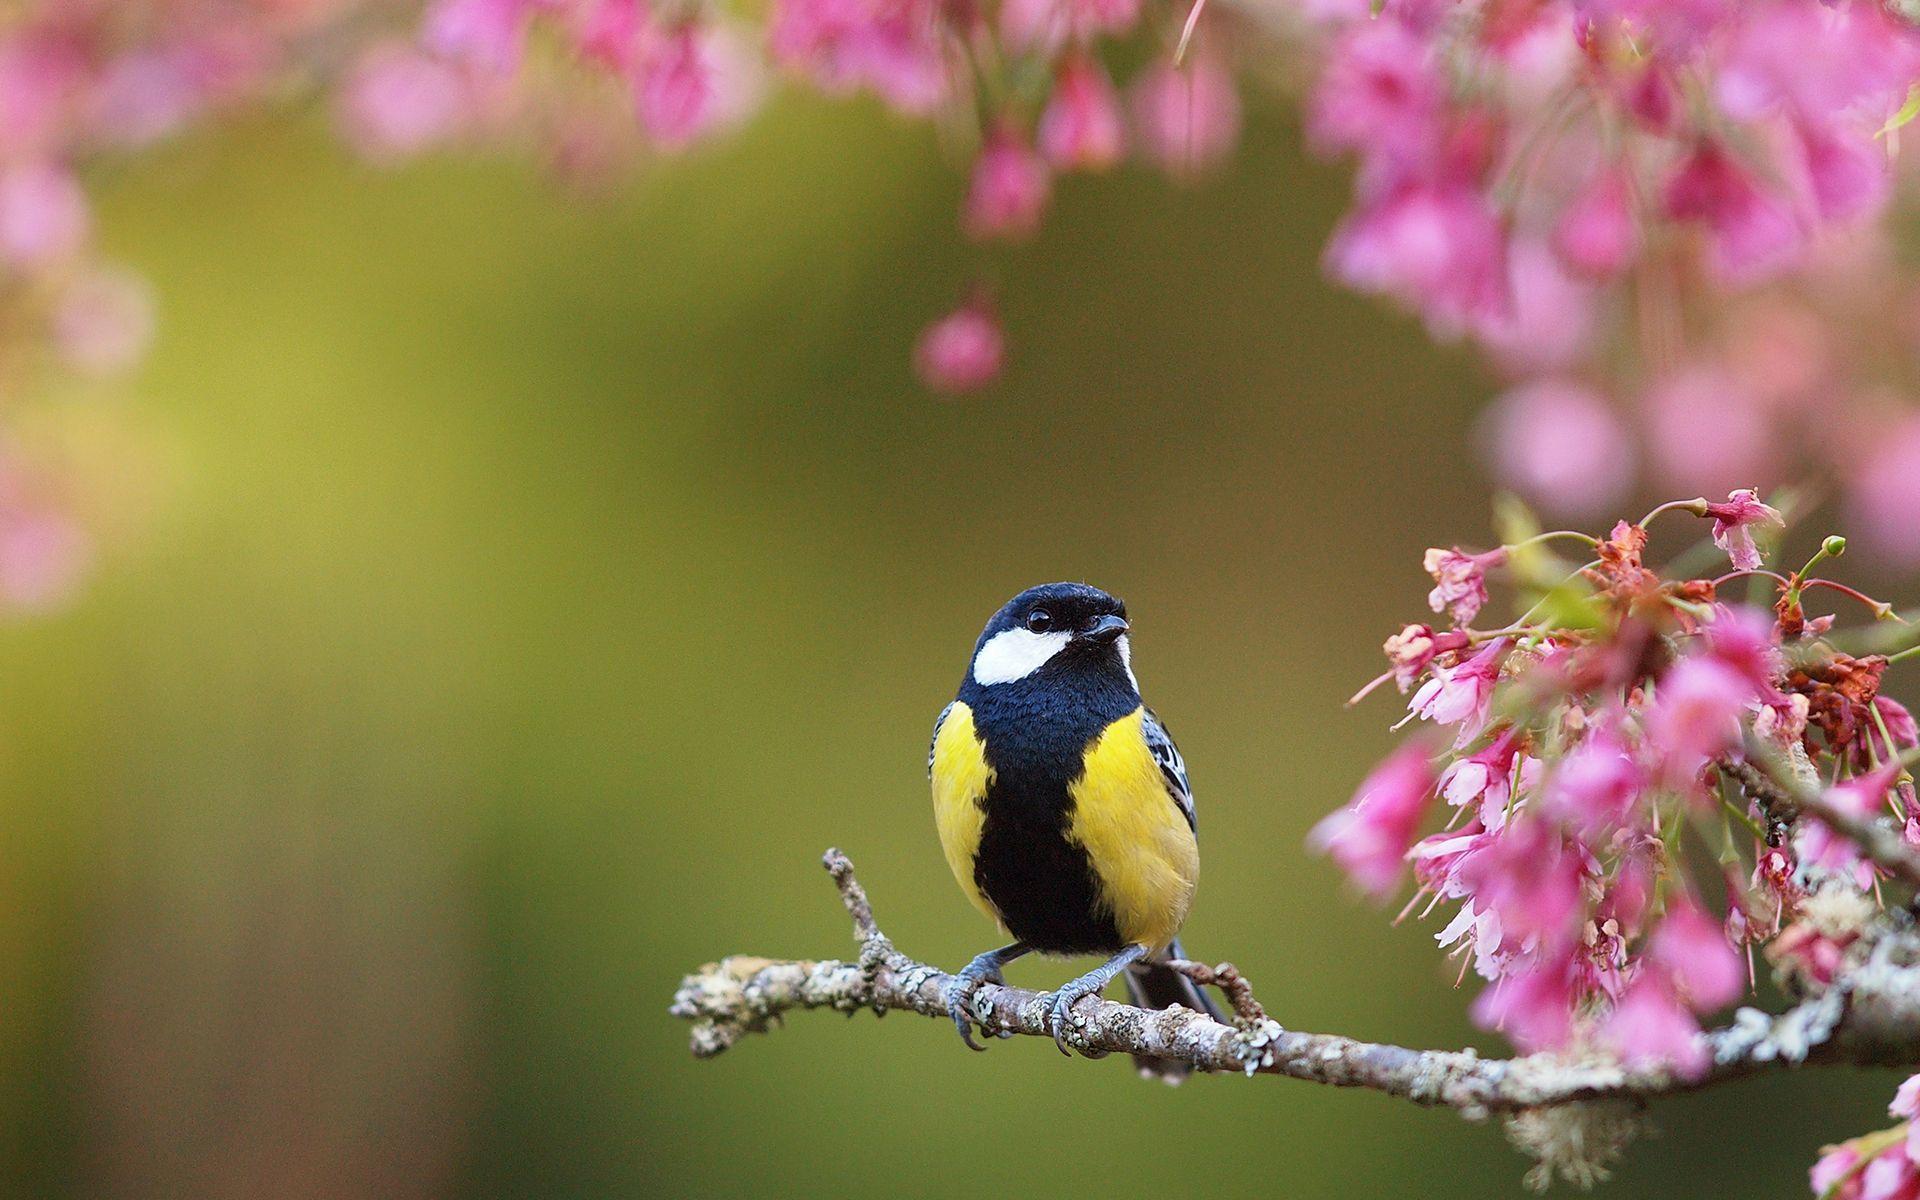 Bird Spring 1.920×1.200 Pixels. Spring Flowers Wallpaper, Spring Wallpaper, Spring Flowers Image